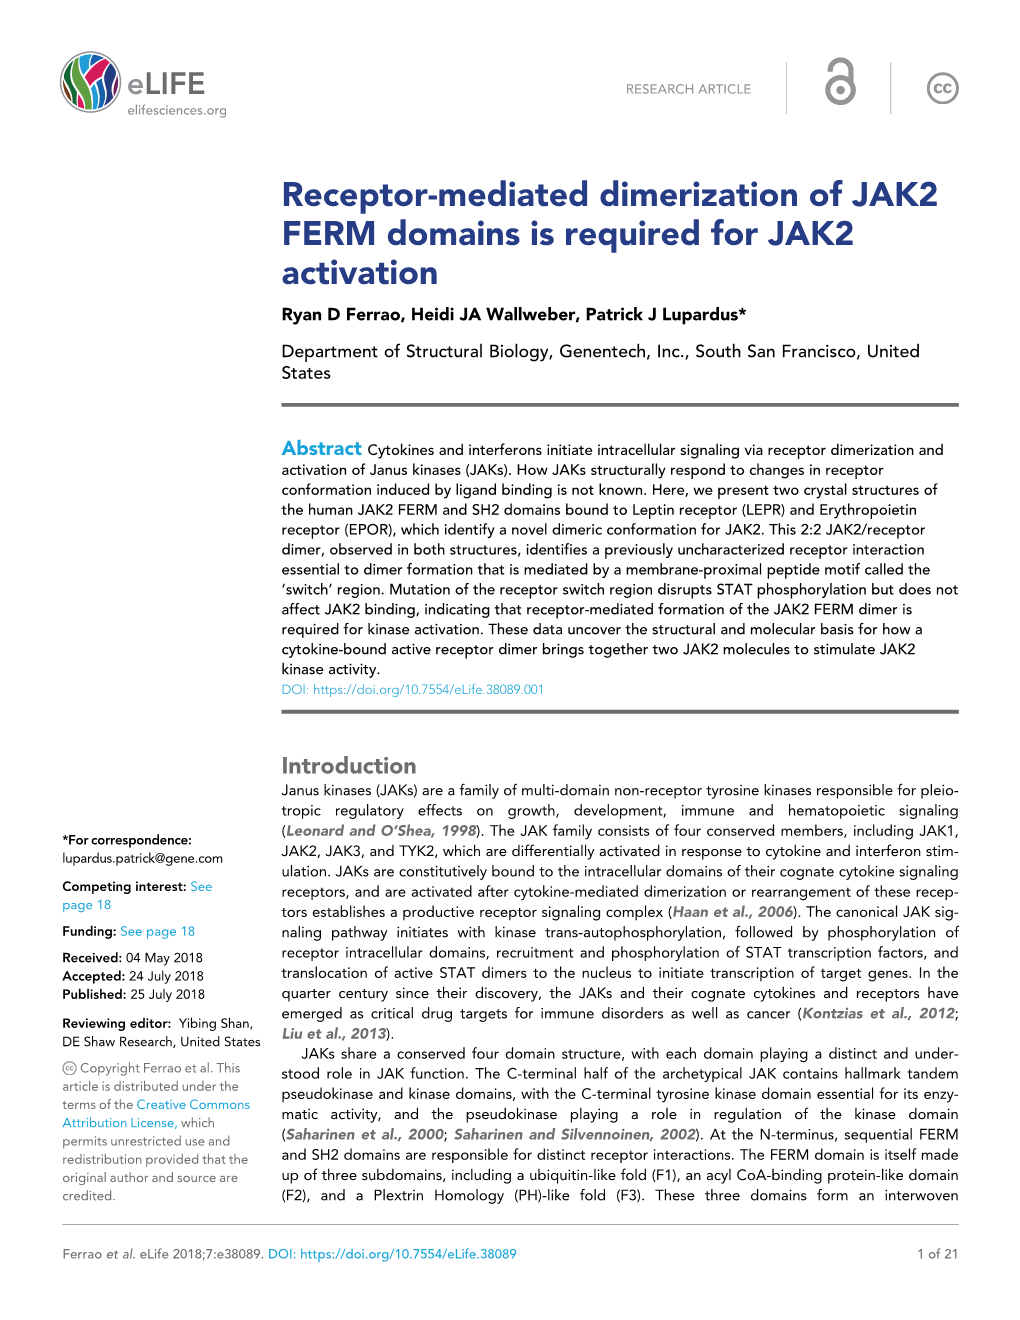 Receptor-Mediated Dimerization of JAK2 FERM Domains Is Required for JAK2 Activation Ryan D Ferrao, Heidi JA Wallweber, Patrick J Lupardus*